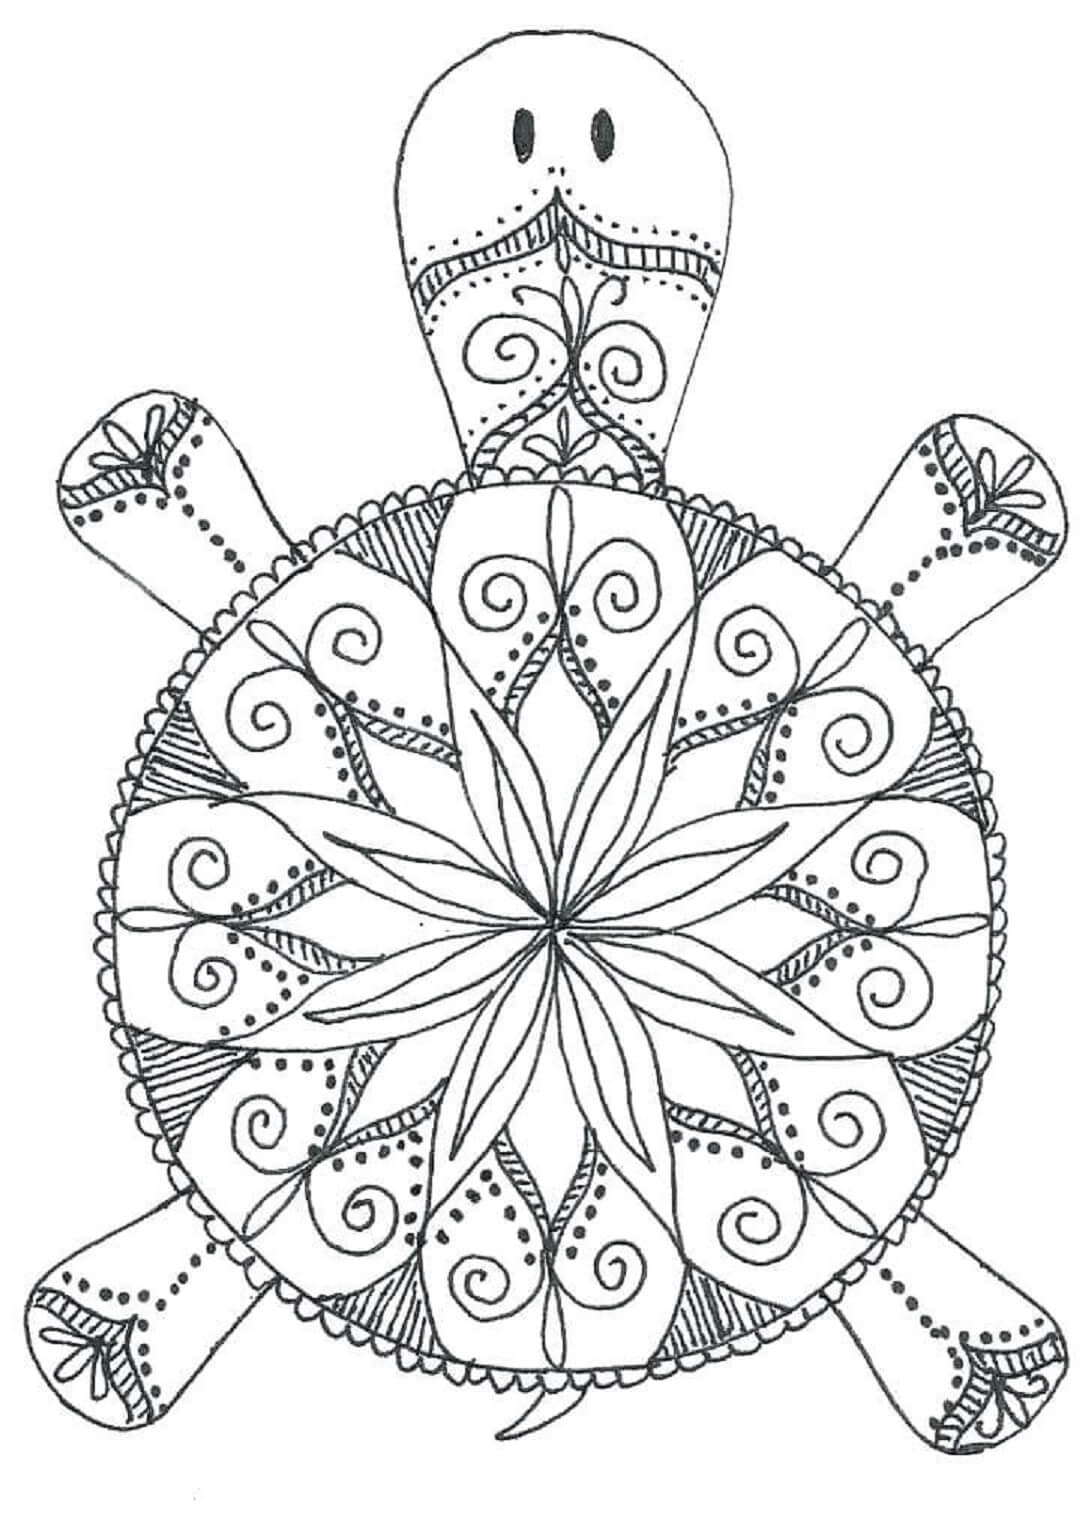 Mandala Turtle Coloring Page - Sheet 1 Mandalas